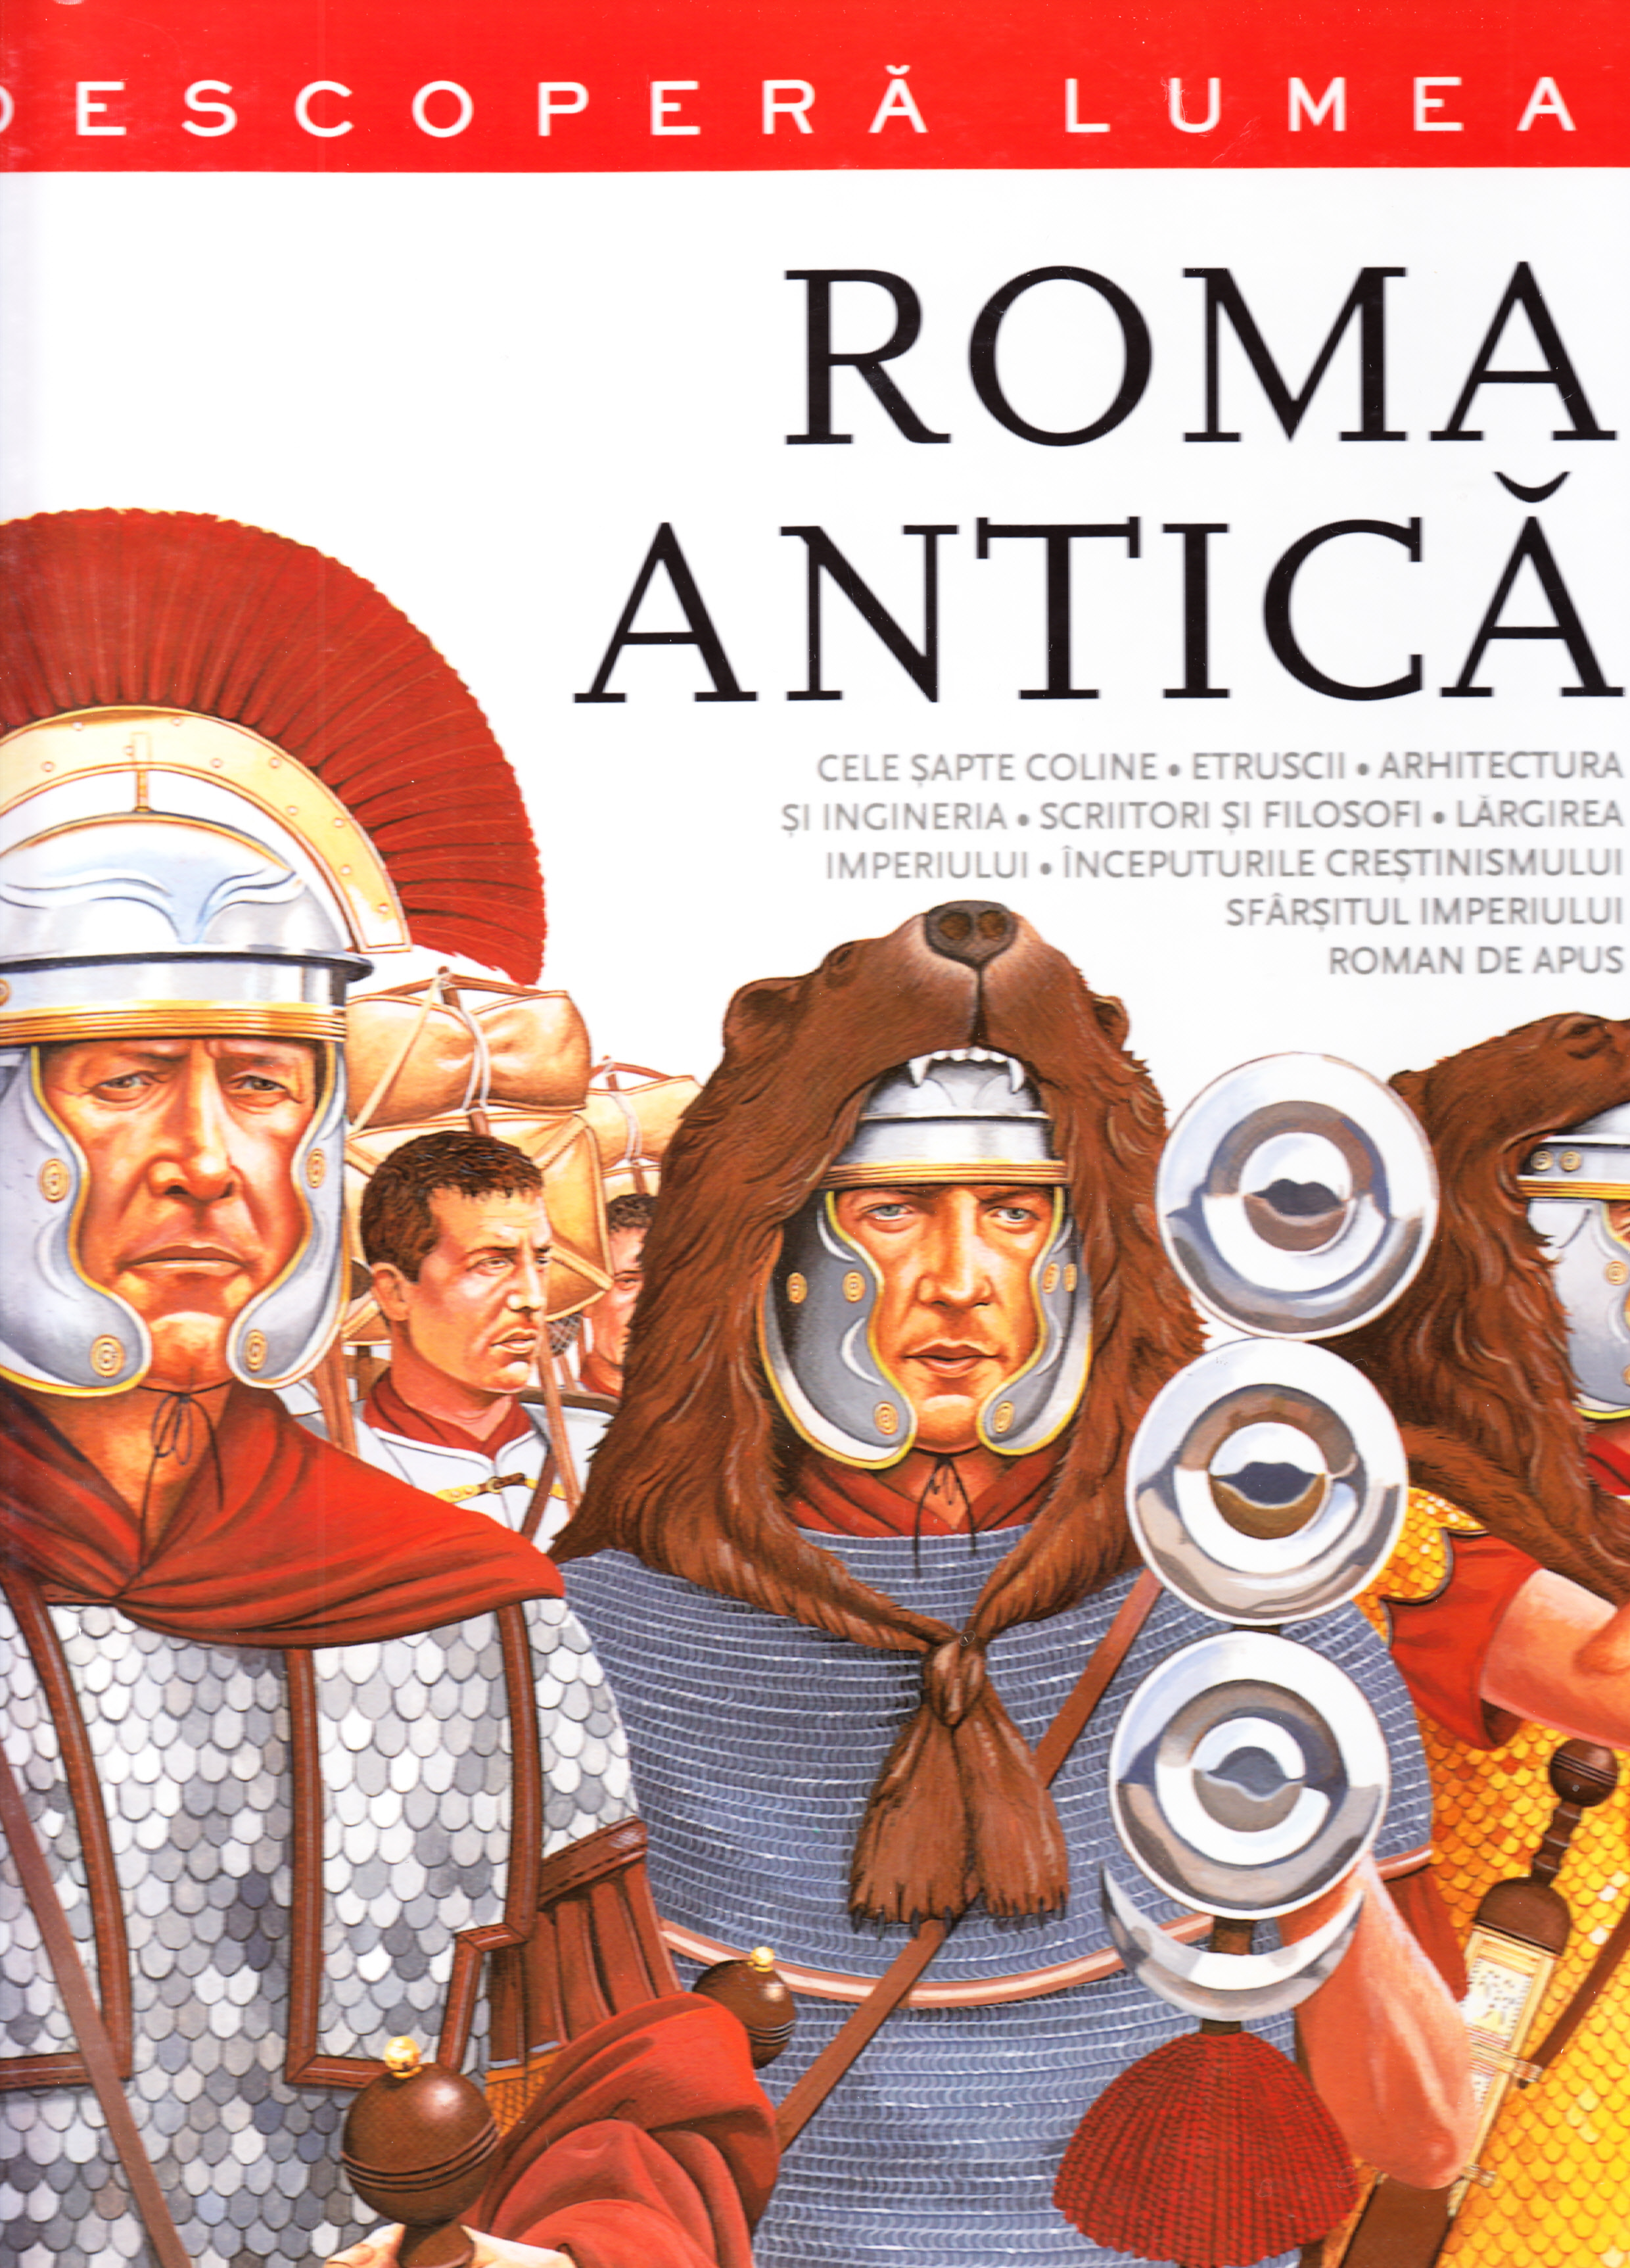 Descopera lumea - Roma antica